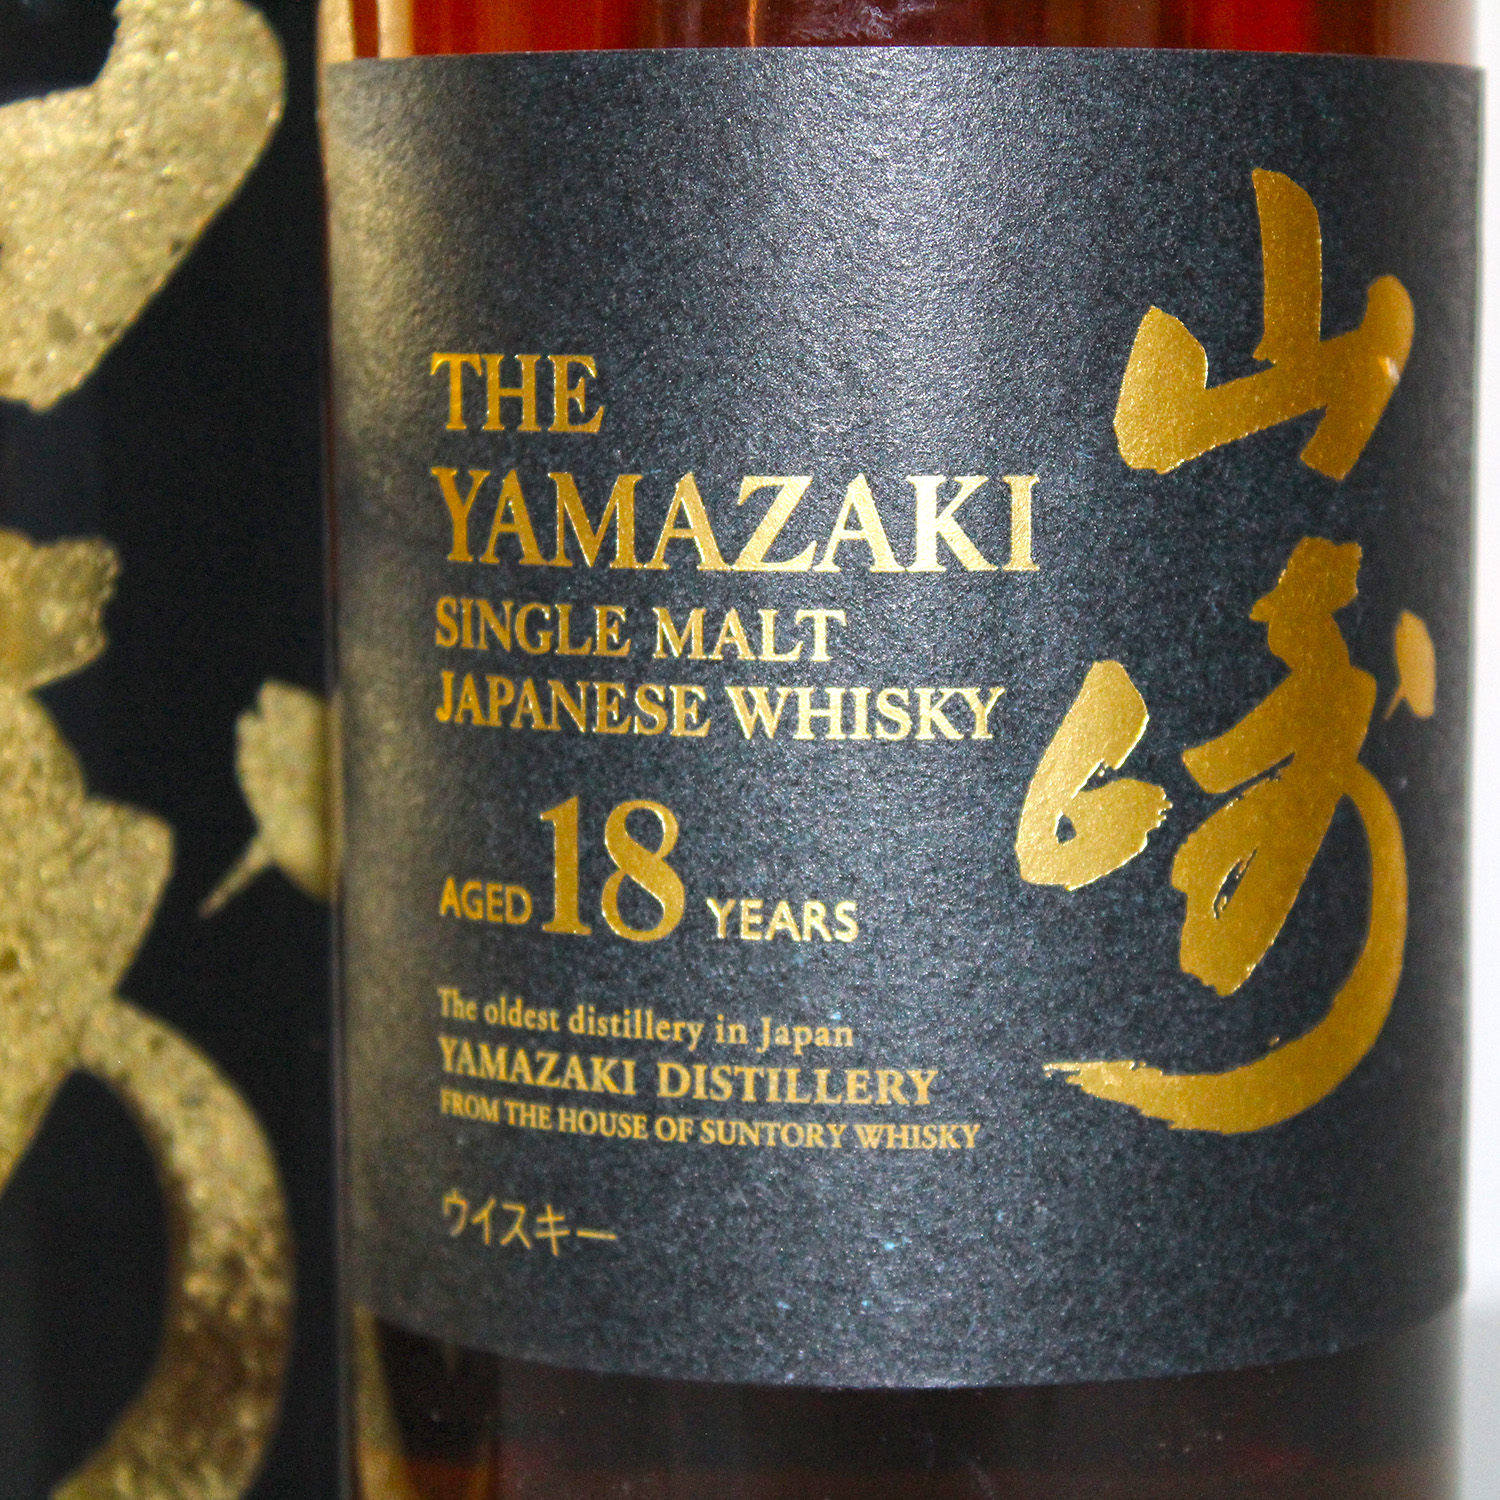 Suntory Yamazaki 18 Years Single Malt Japanese Whisky Label